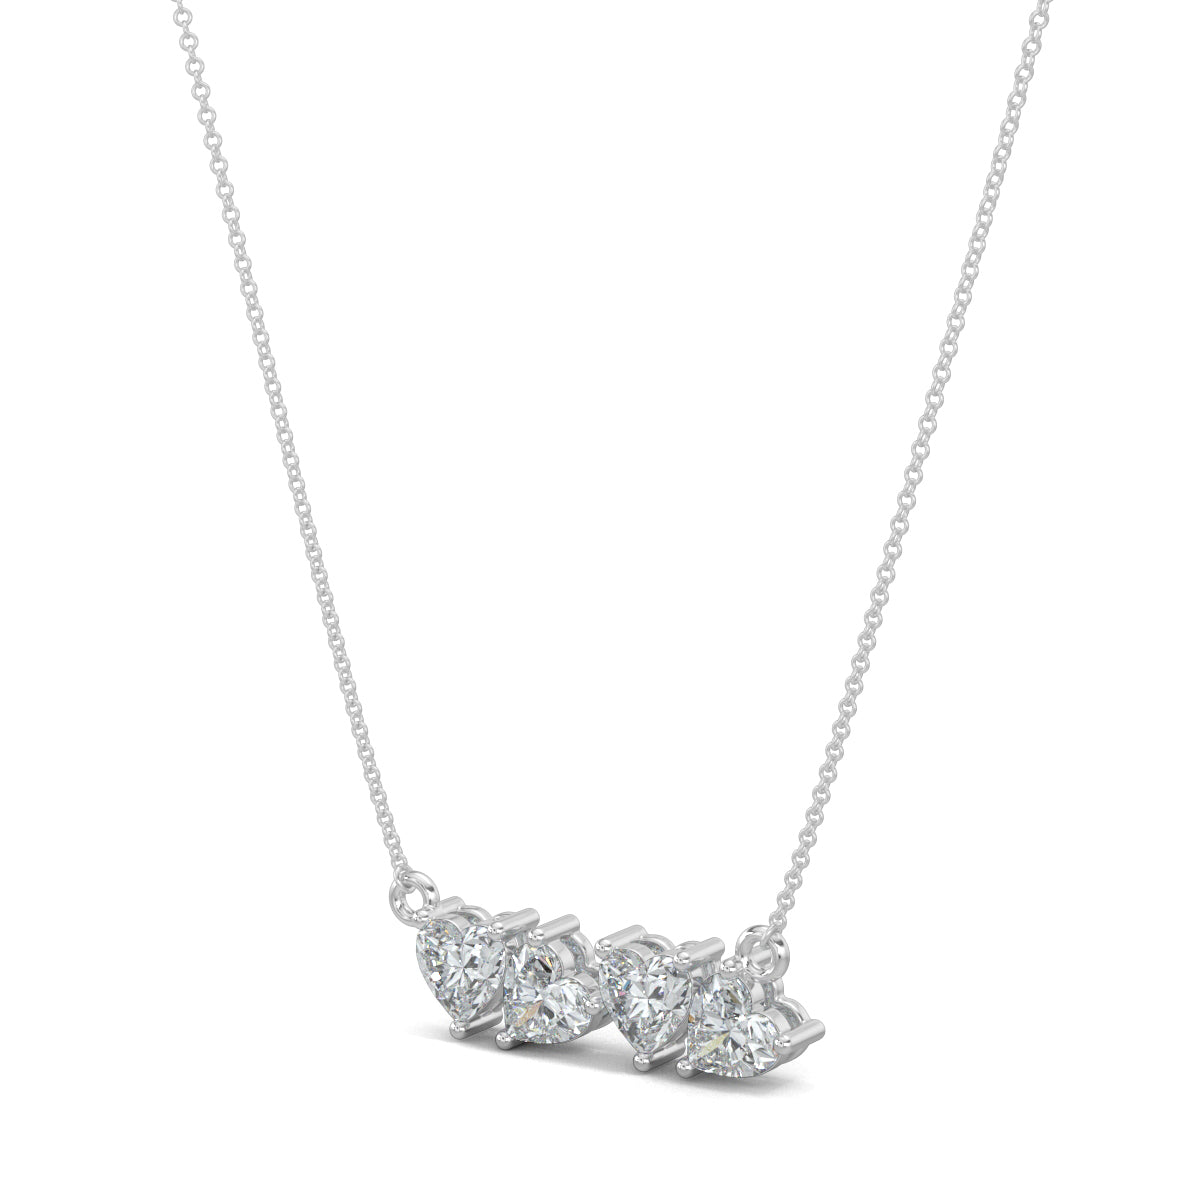 White Gold, Diamond Pendants, natural diamond pendant, lab-grown diamond pendant, Love Line Diamond Pendant, Forever Yours collection, casual diamond pendant, heart-shaped diamonds